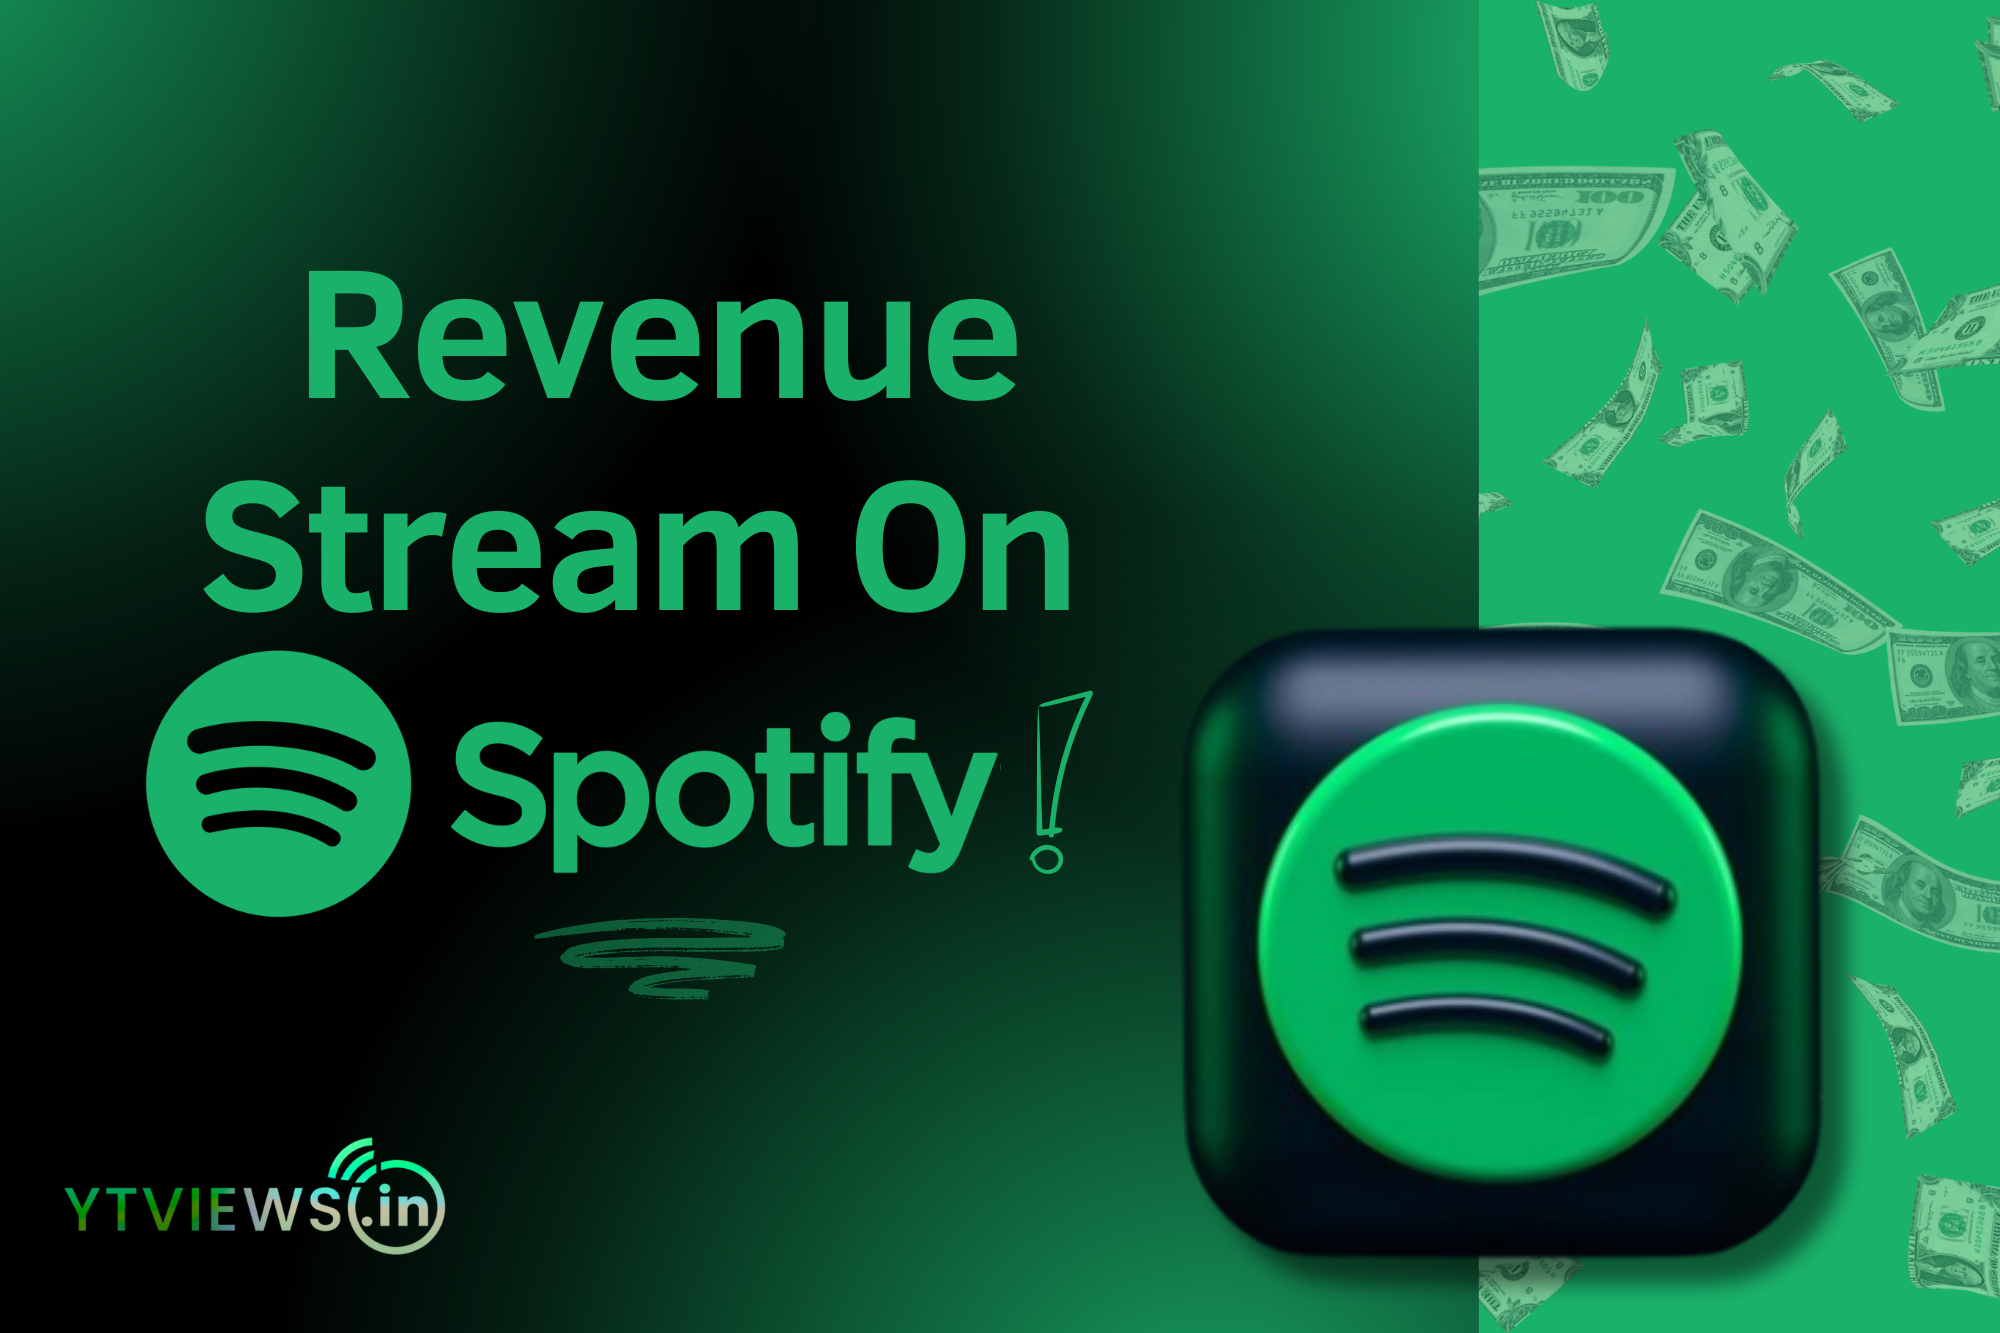 Revenue stream on Spotify: How do you earn money?